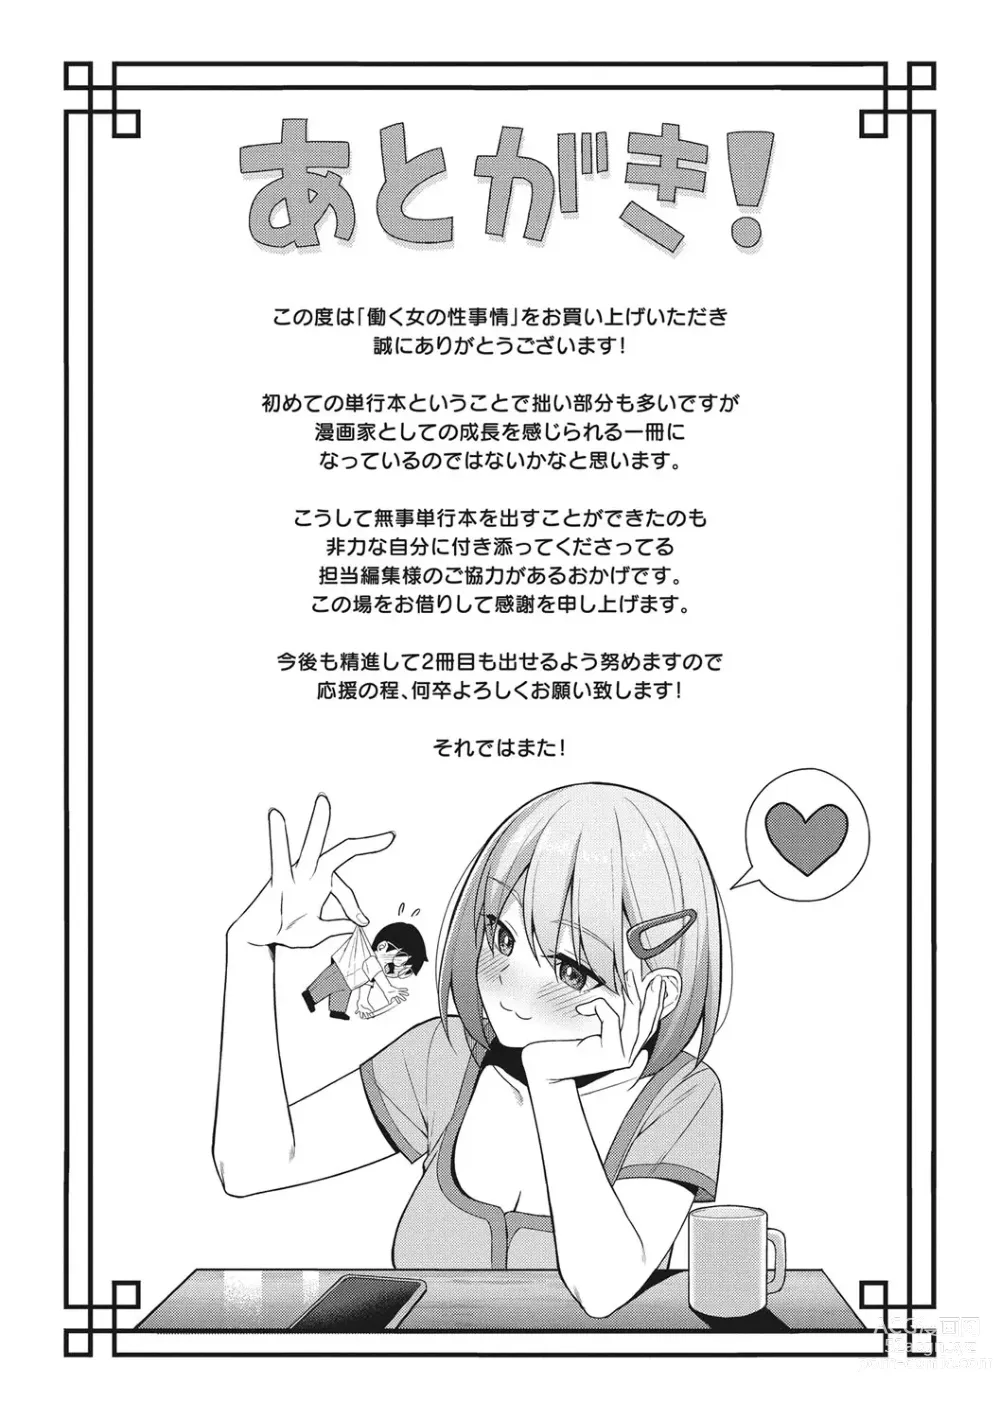 Page 194 of manga Hataraku Onna no Sei Jijou - Sexual Conditions for Working Women